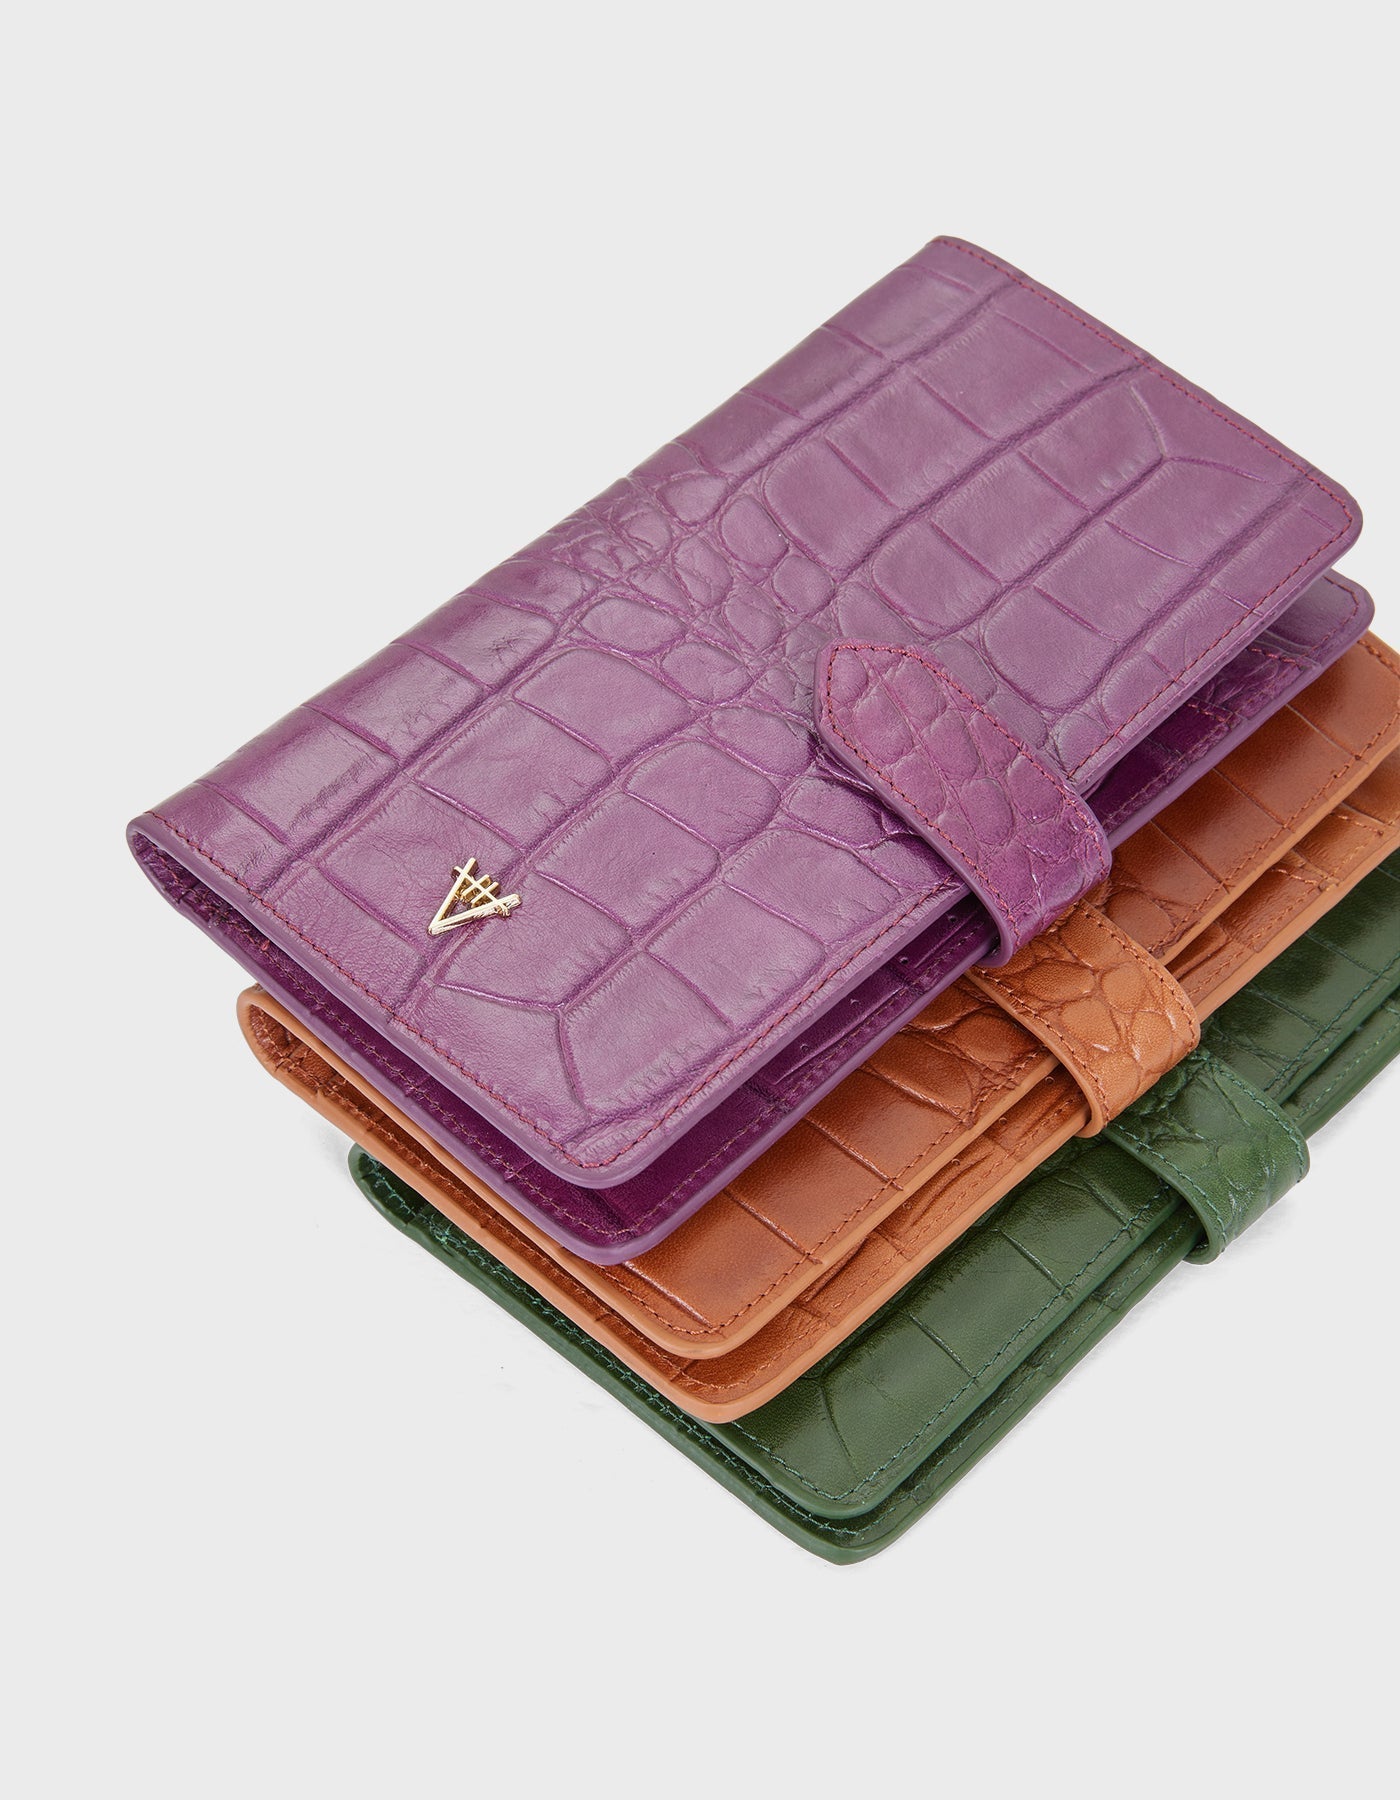 HiVa Atelier | Ita Crossbody Bag and Wallet Black | Beautiful and Versatile